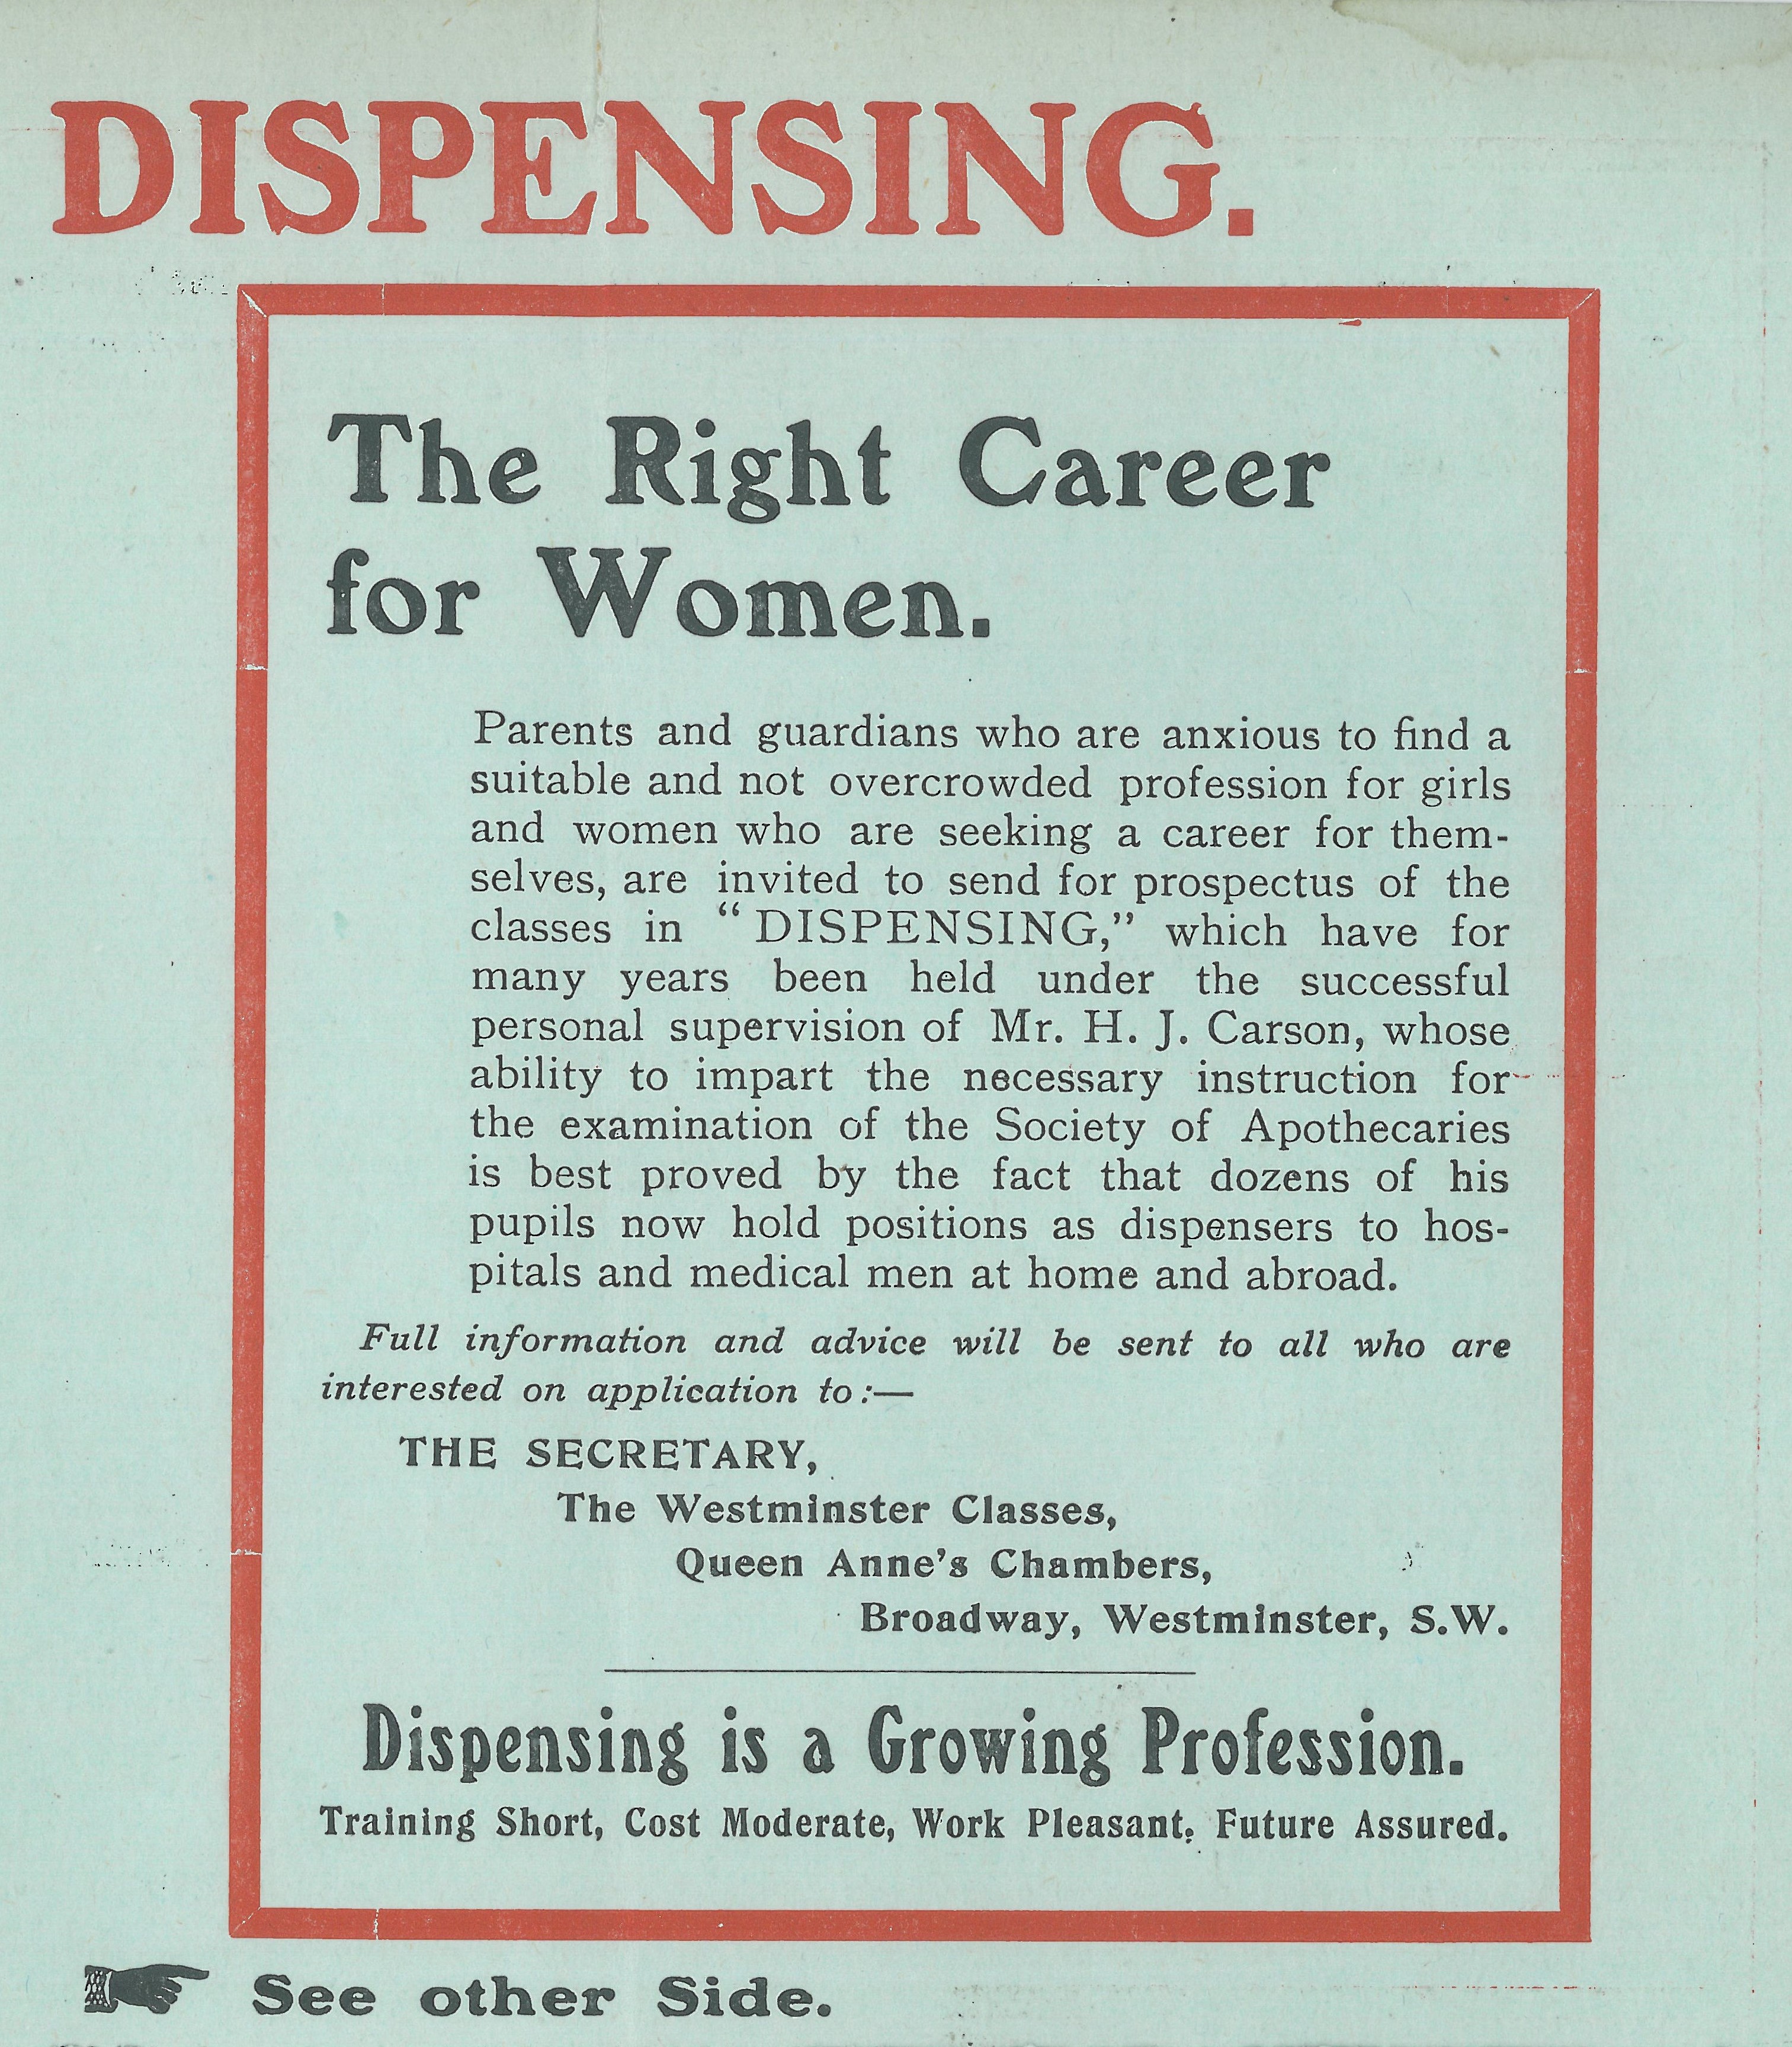 IRA1996-125 Dispensing. The Right Career for Women, Circa 1911